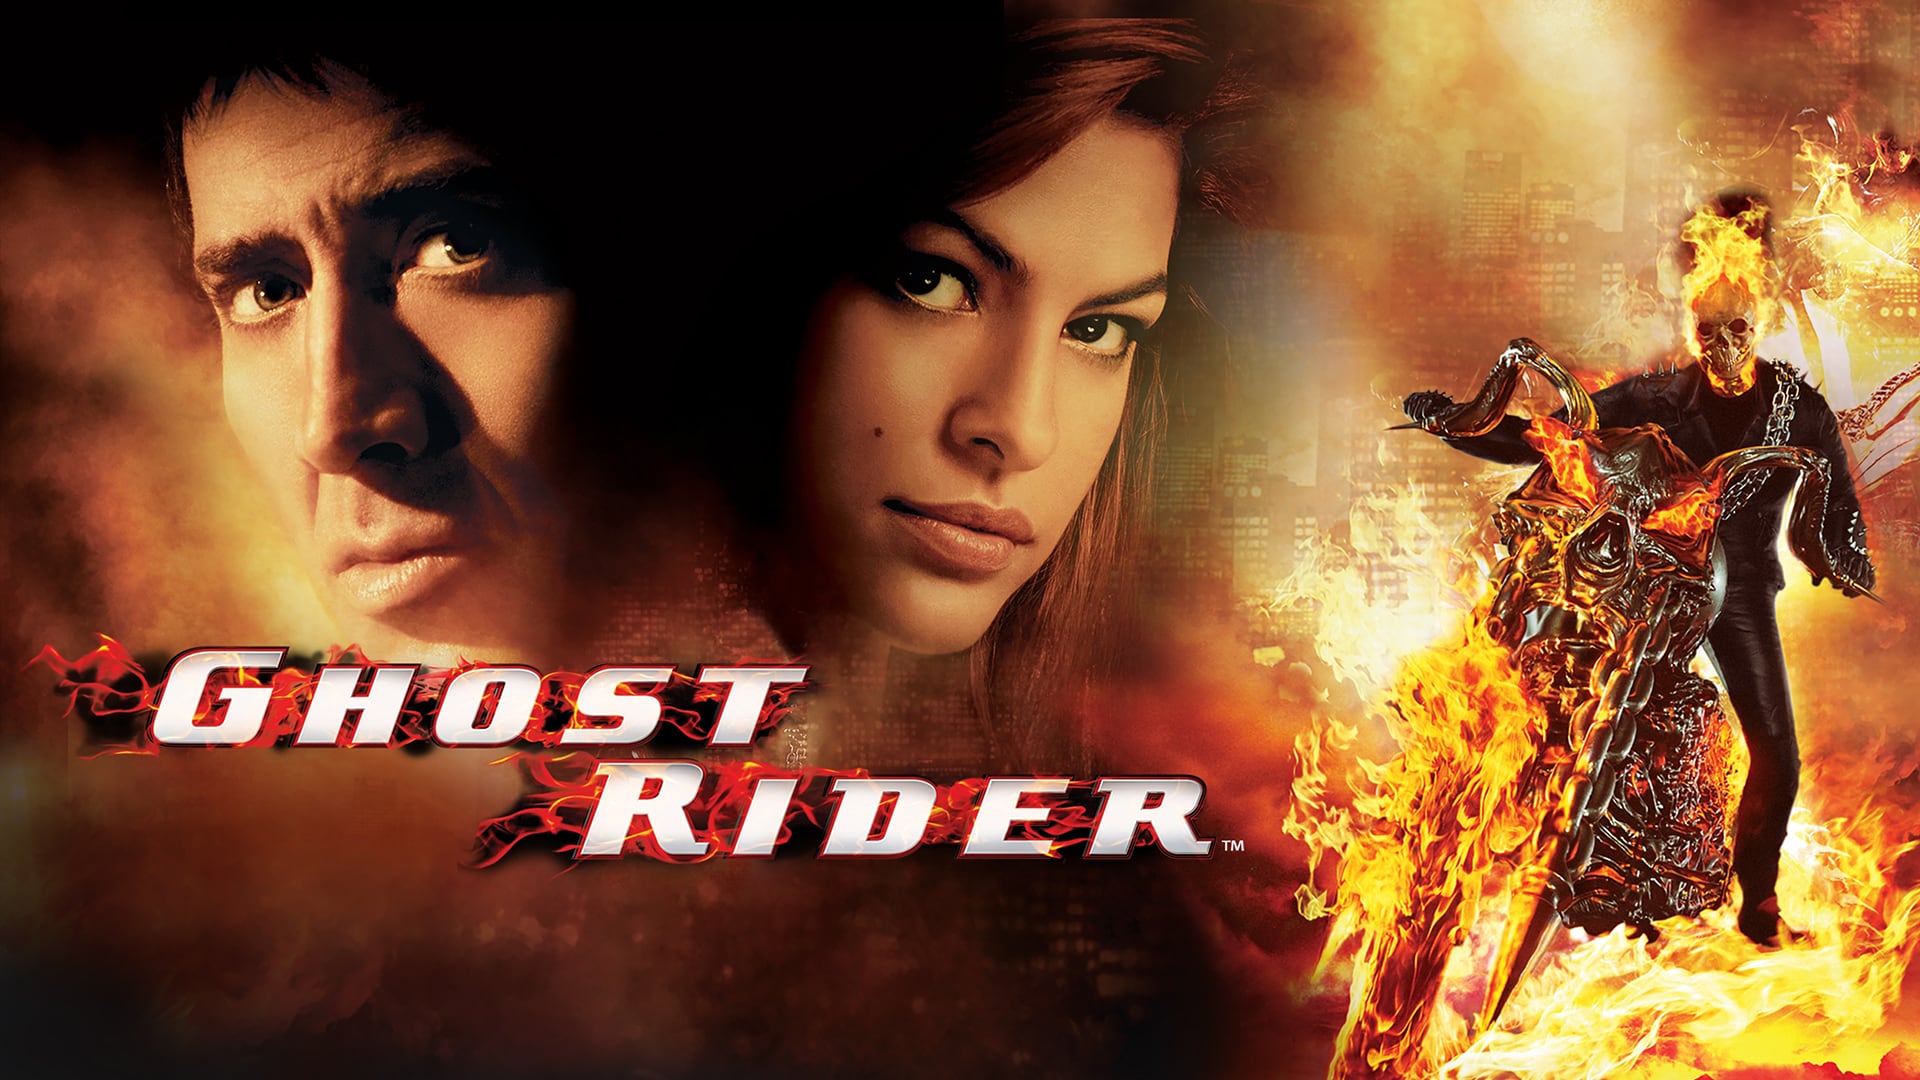 Watch Ghost Rider Online | Stream Full Movies